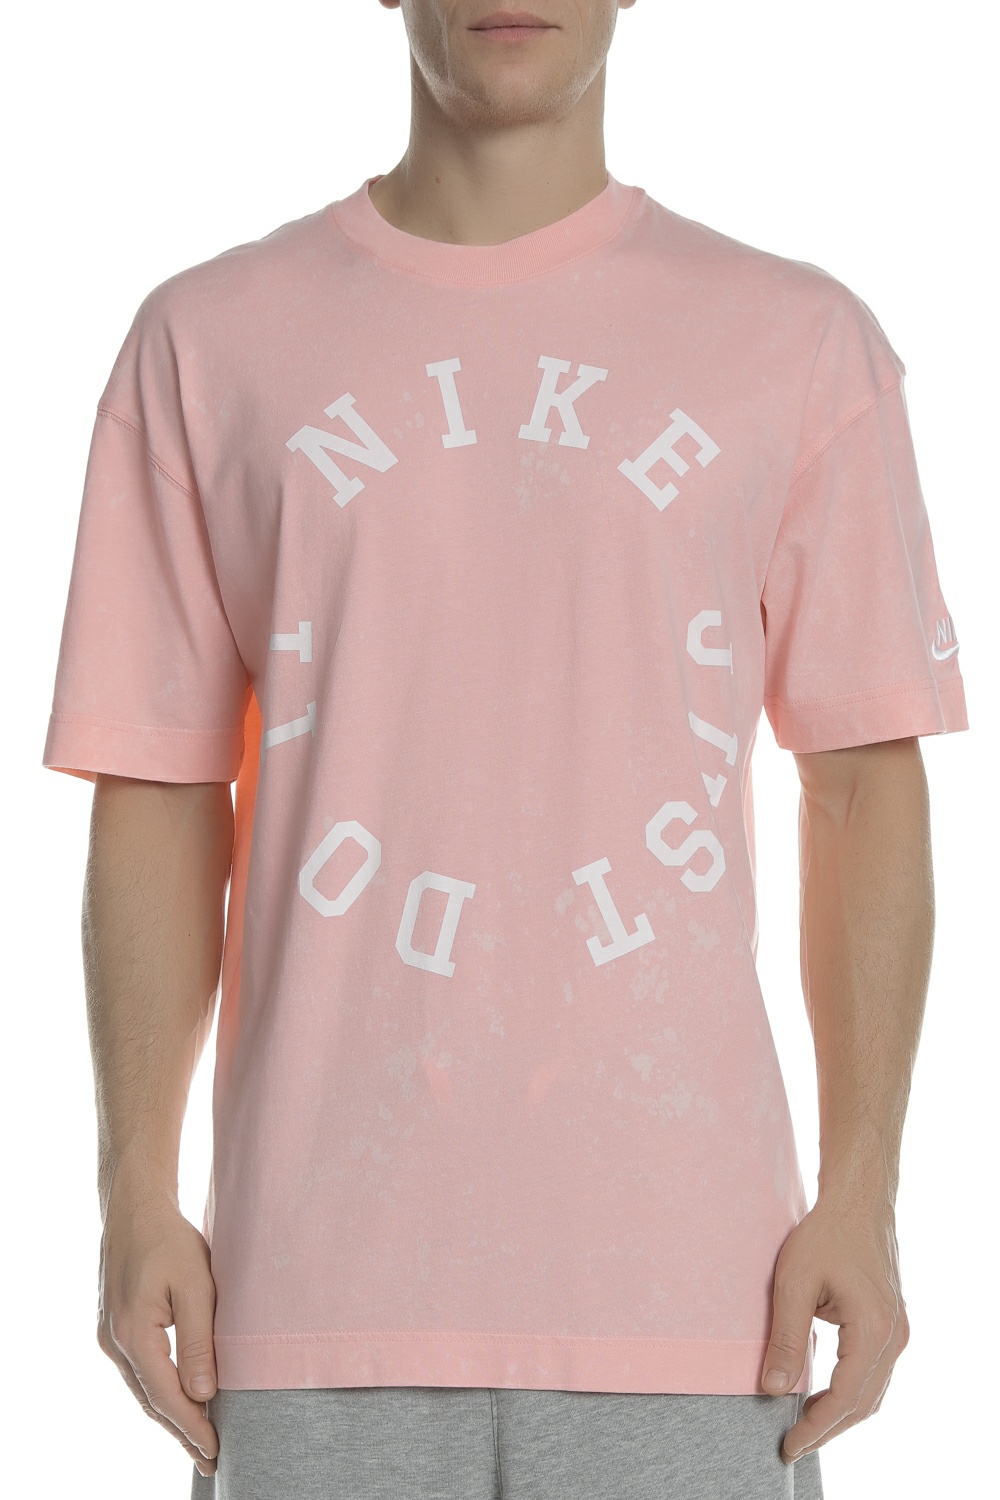 NIKE - Ανδρικό t-shirt Nike Sportswear Men's κοραλί Ανδρικά/Ρούχα/Αθλητικά/T-shirt